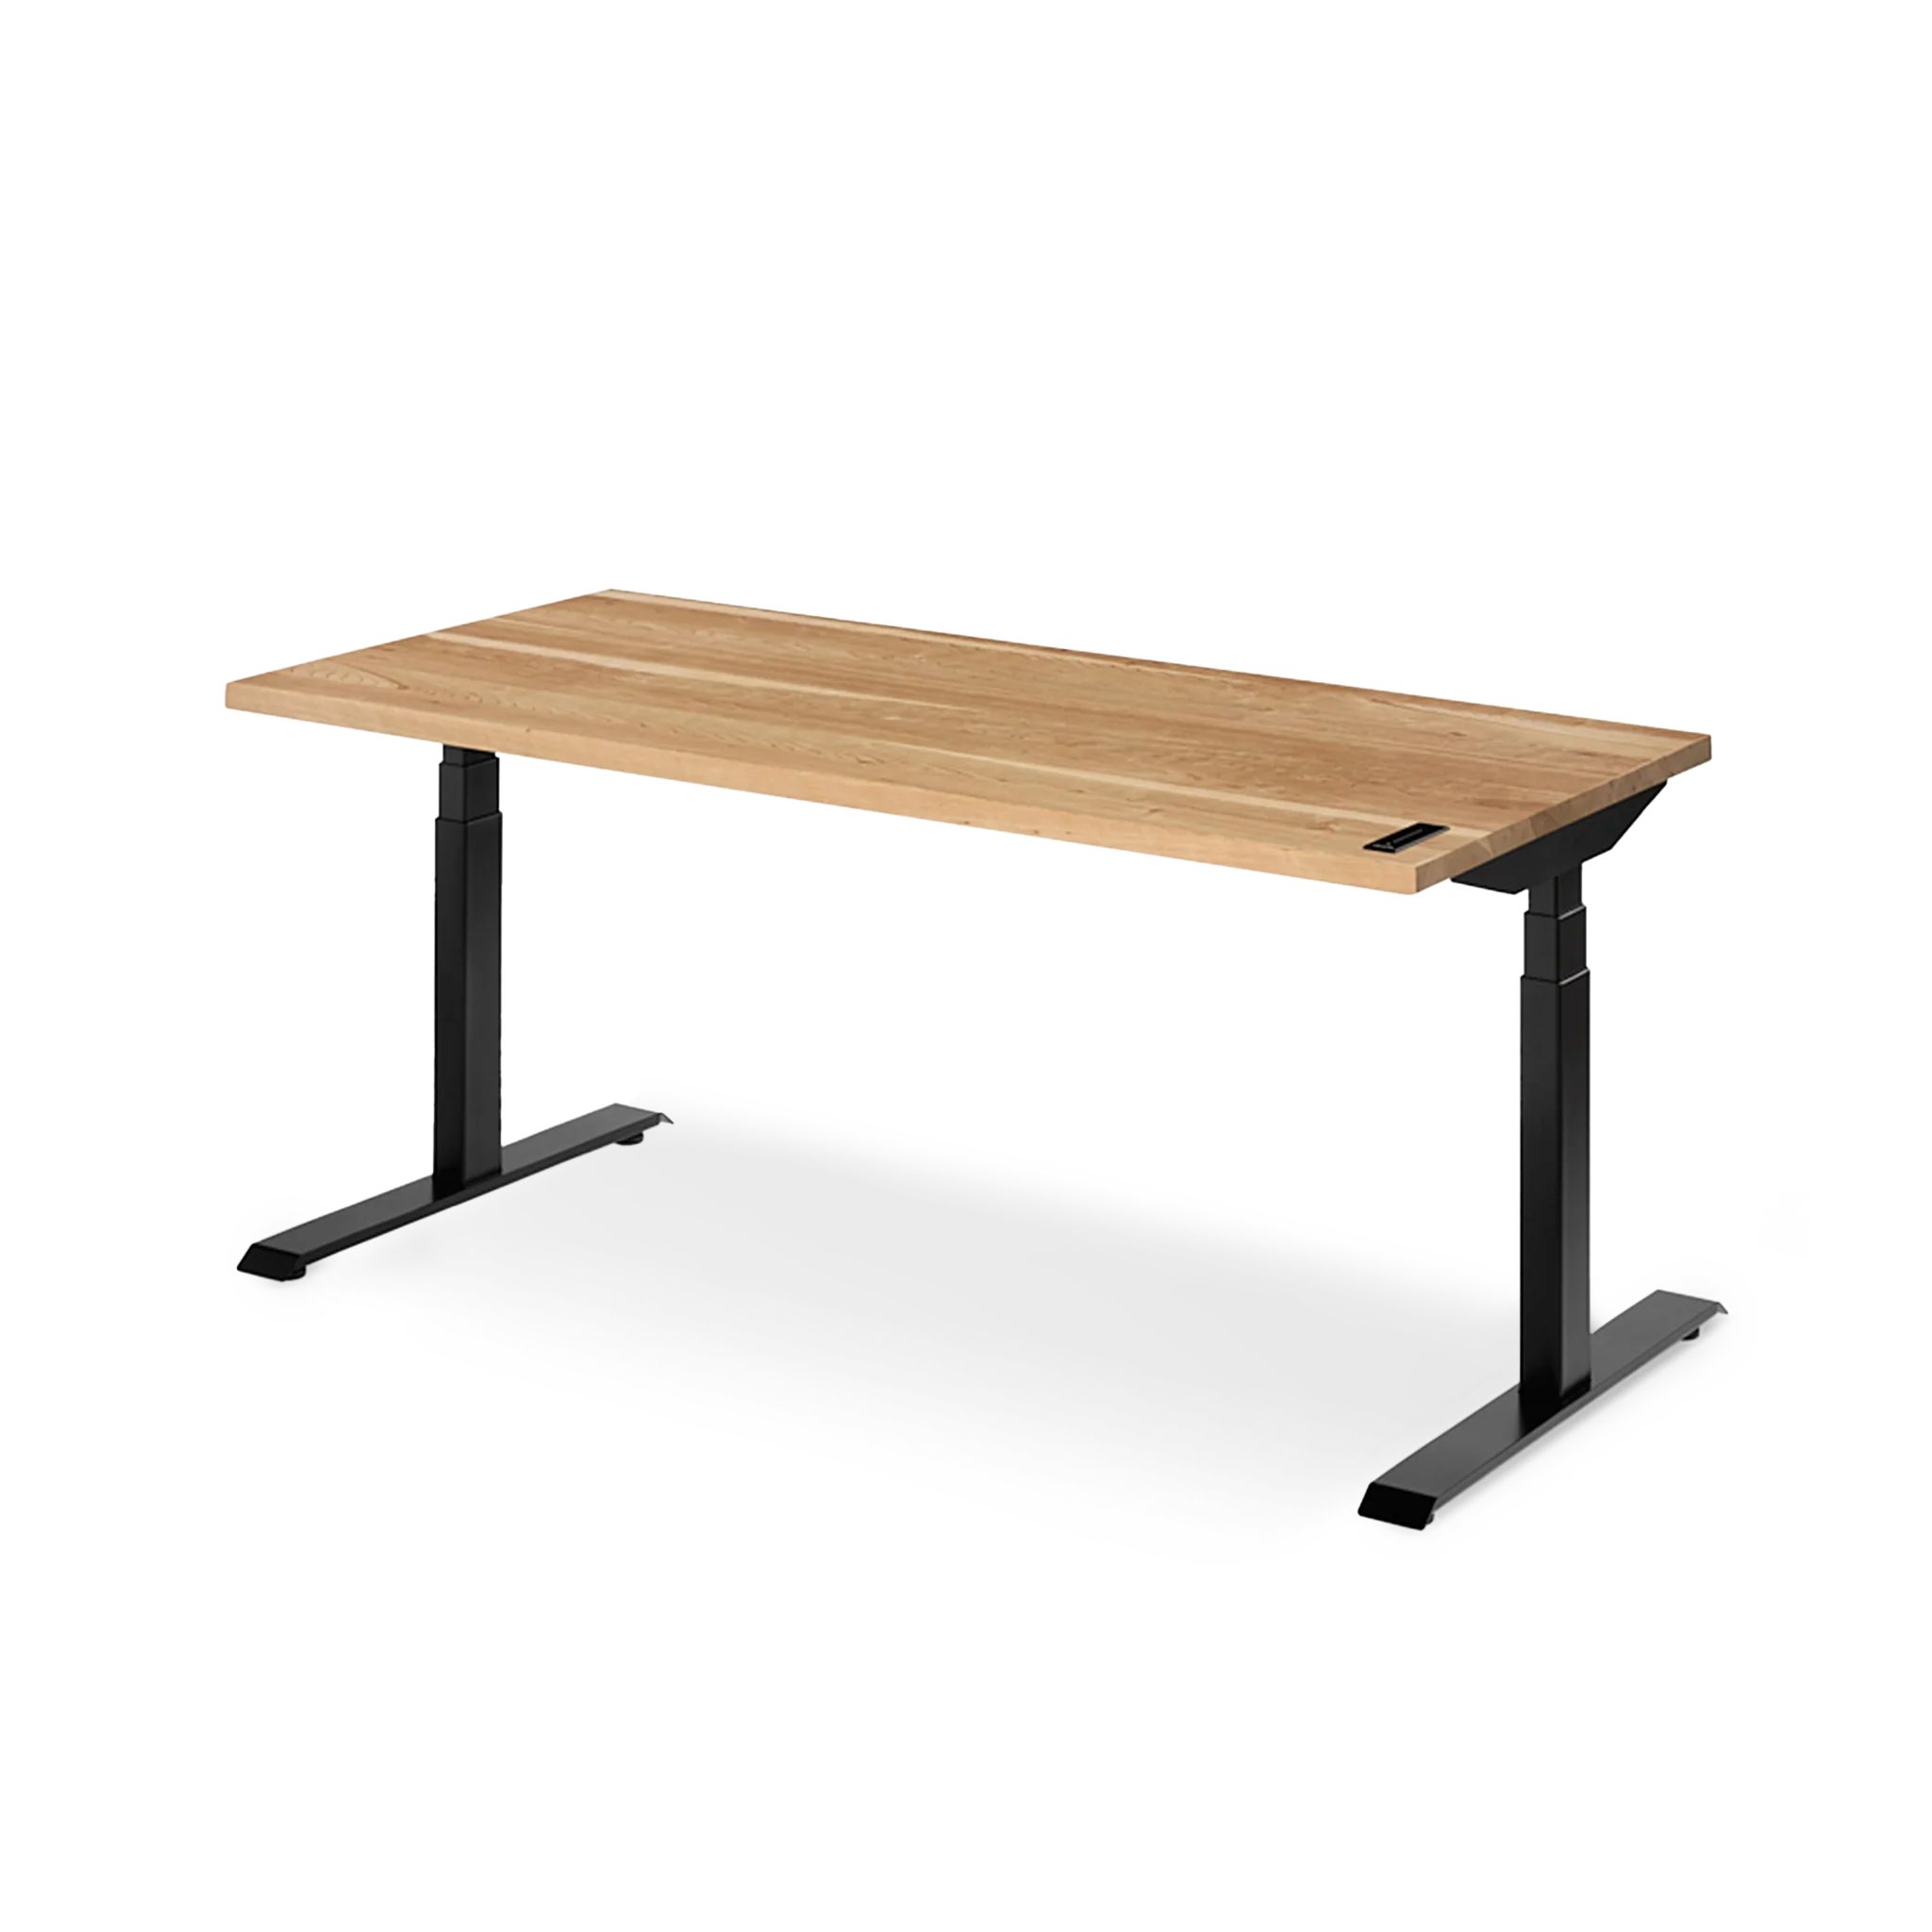 Solid Wood Standing Desk: Shop the Sway Desk | Ergonofis | ergonofis